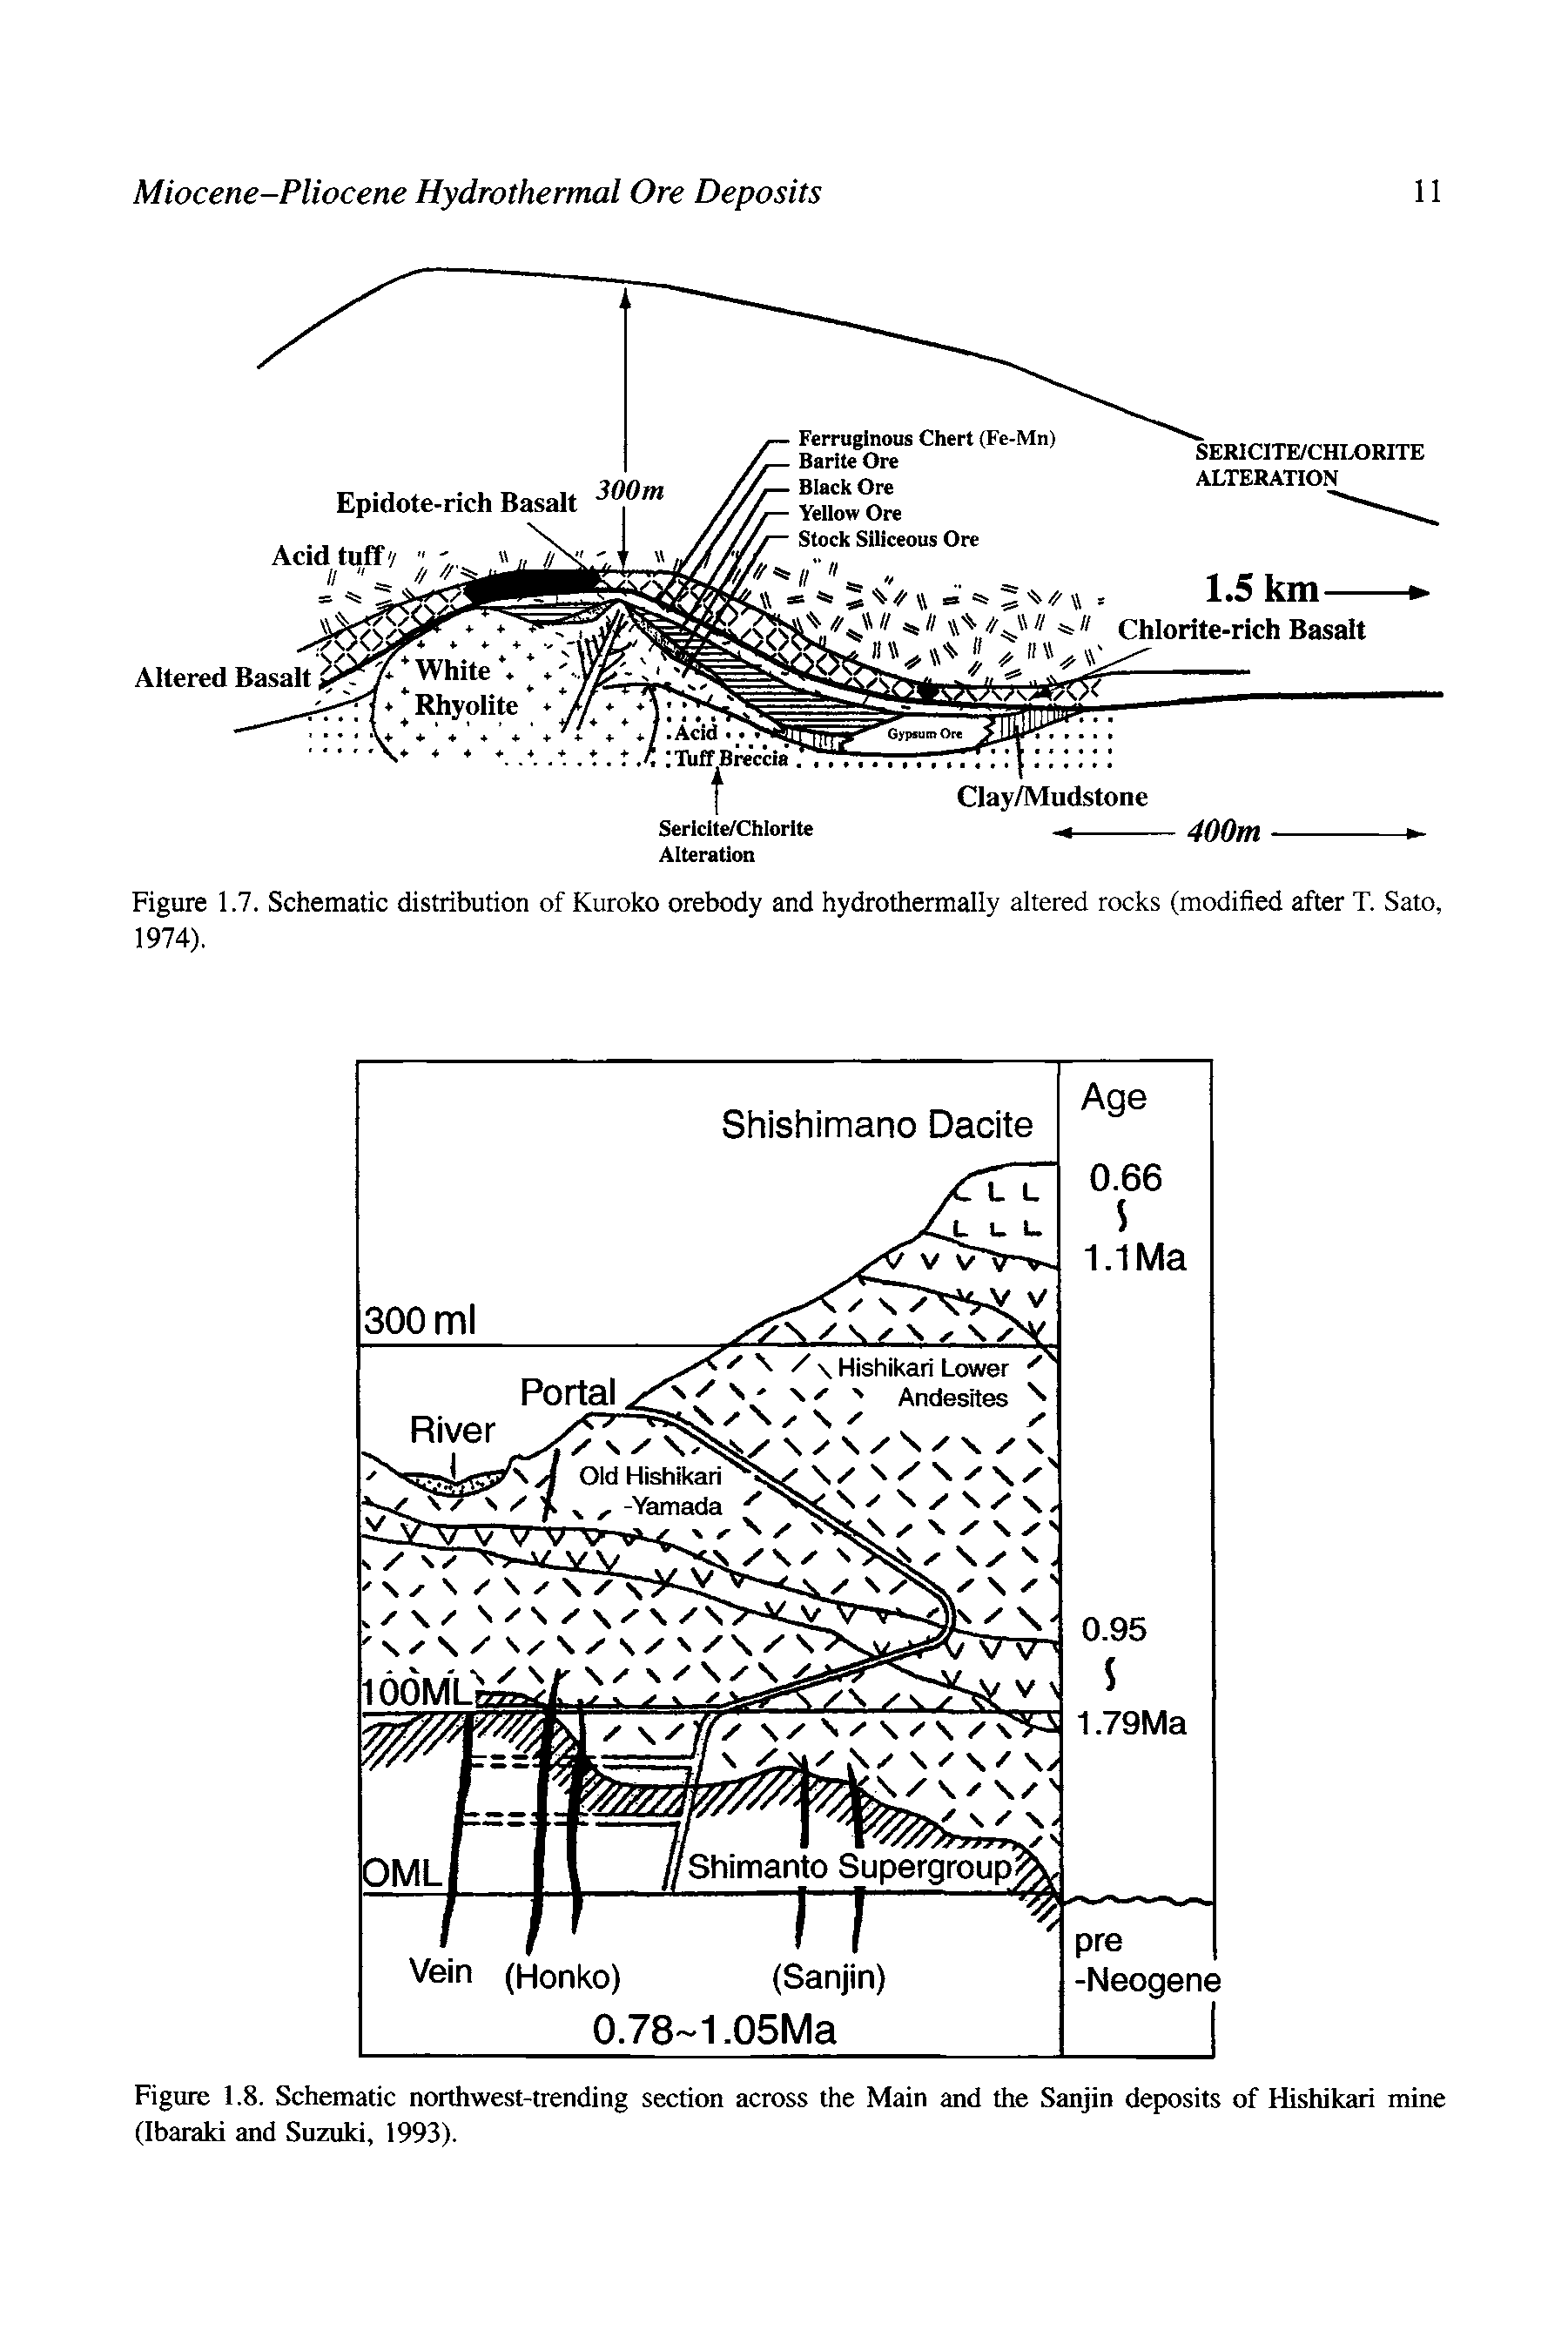 Figure 1.8. Schematic northwest-trending section across the Main and the Sanjin deposits of Hishikari mine (Ibaraki and Suzuki, 1993).